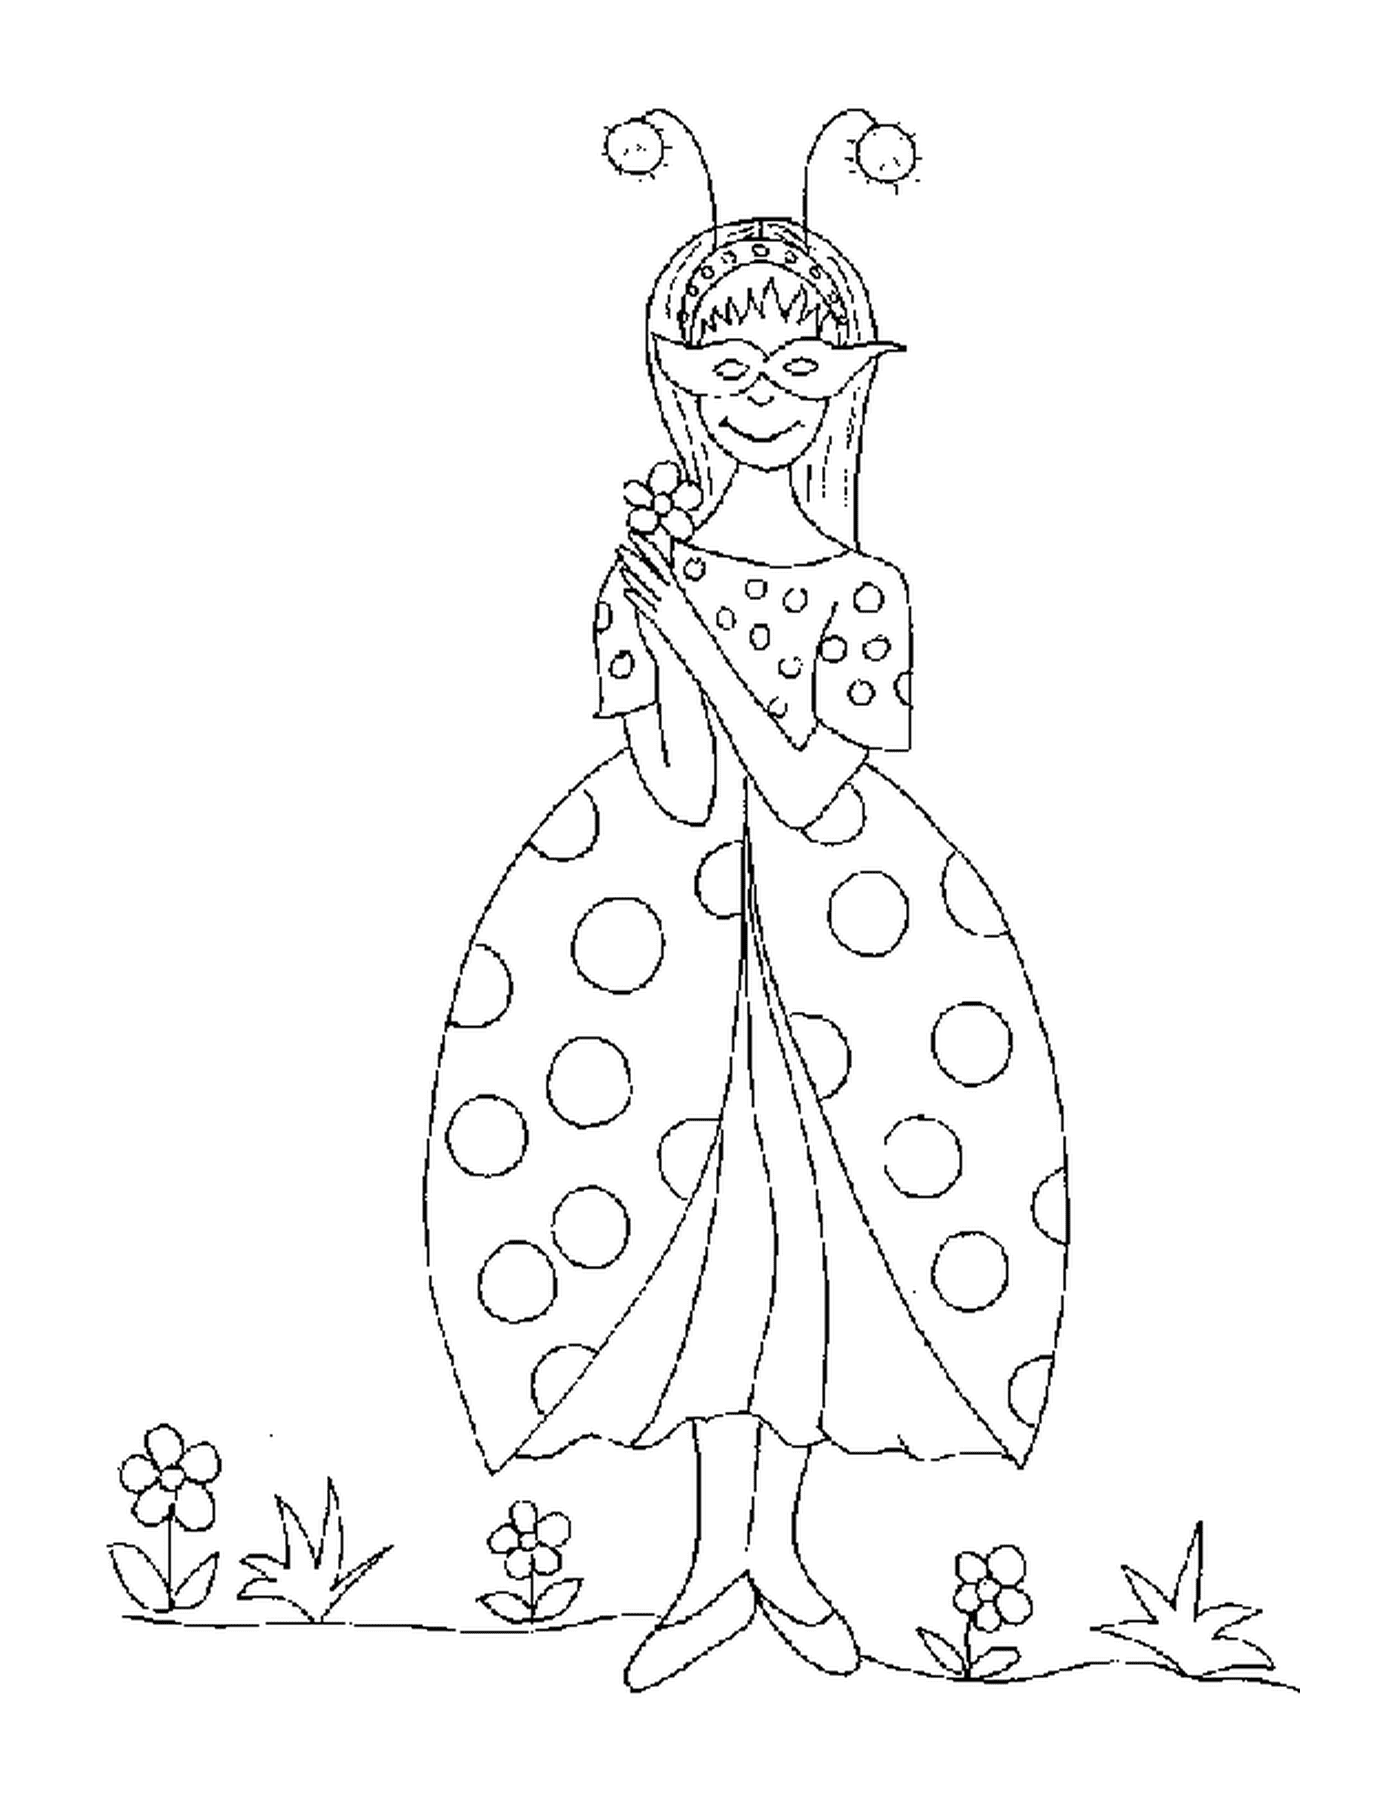  Un disfraz de mariquita para el carnaval 